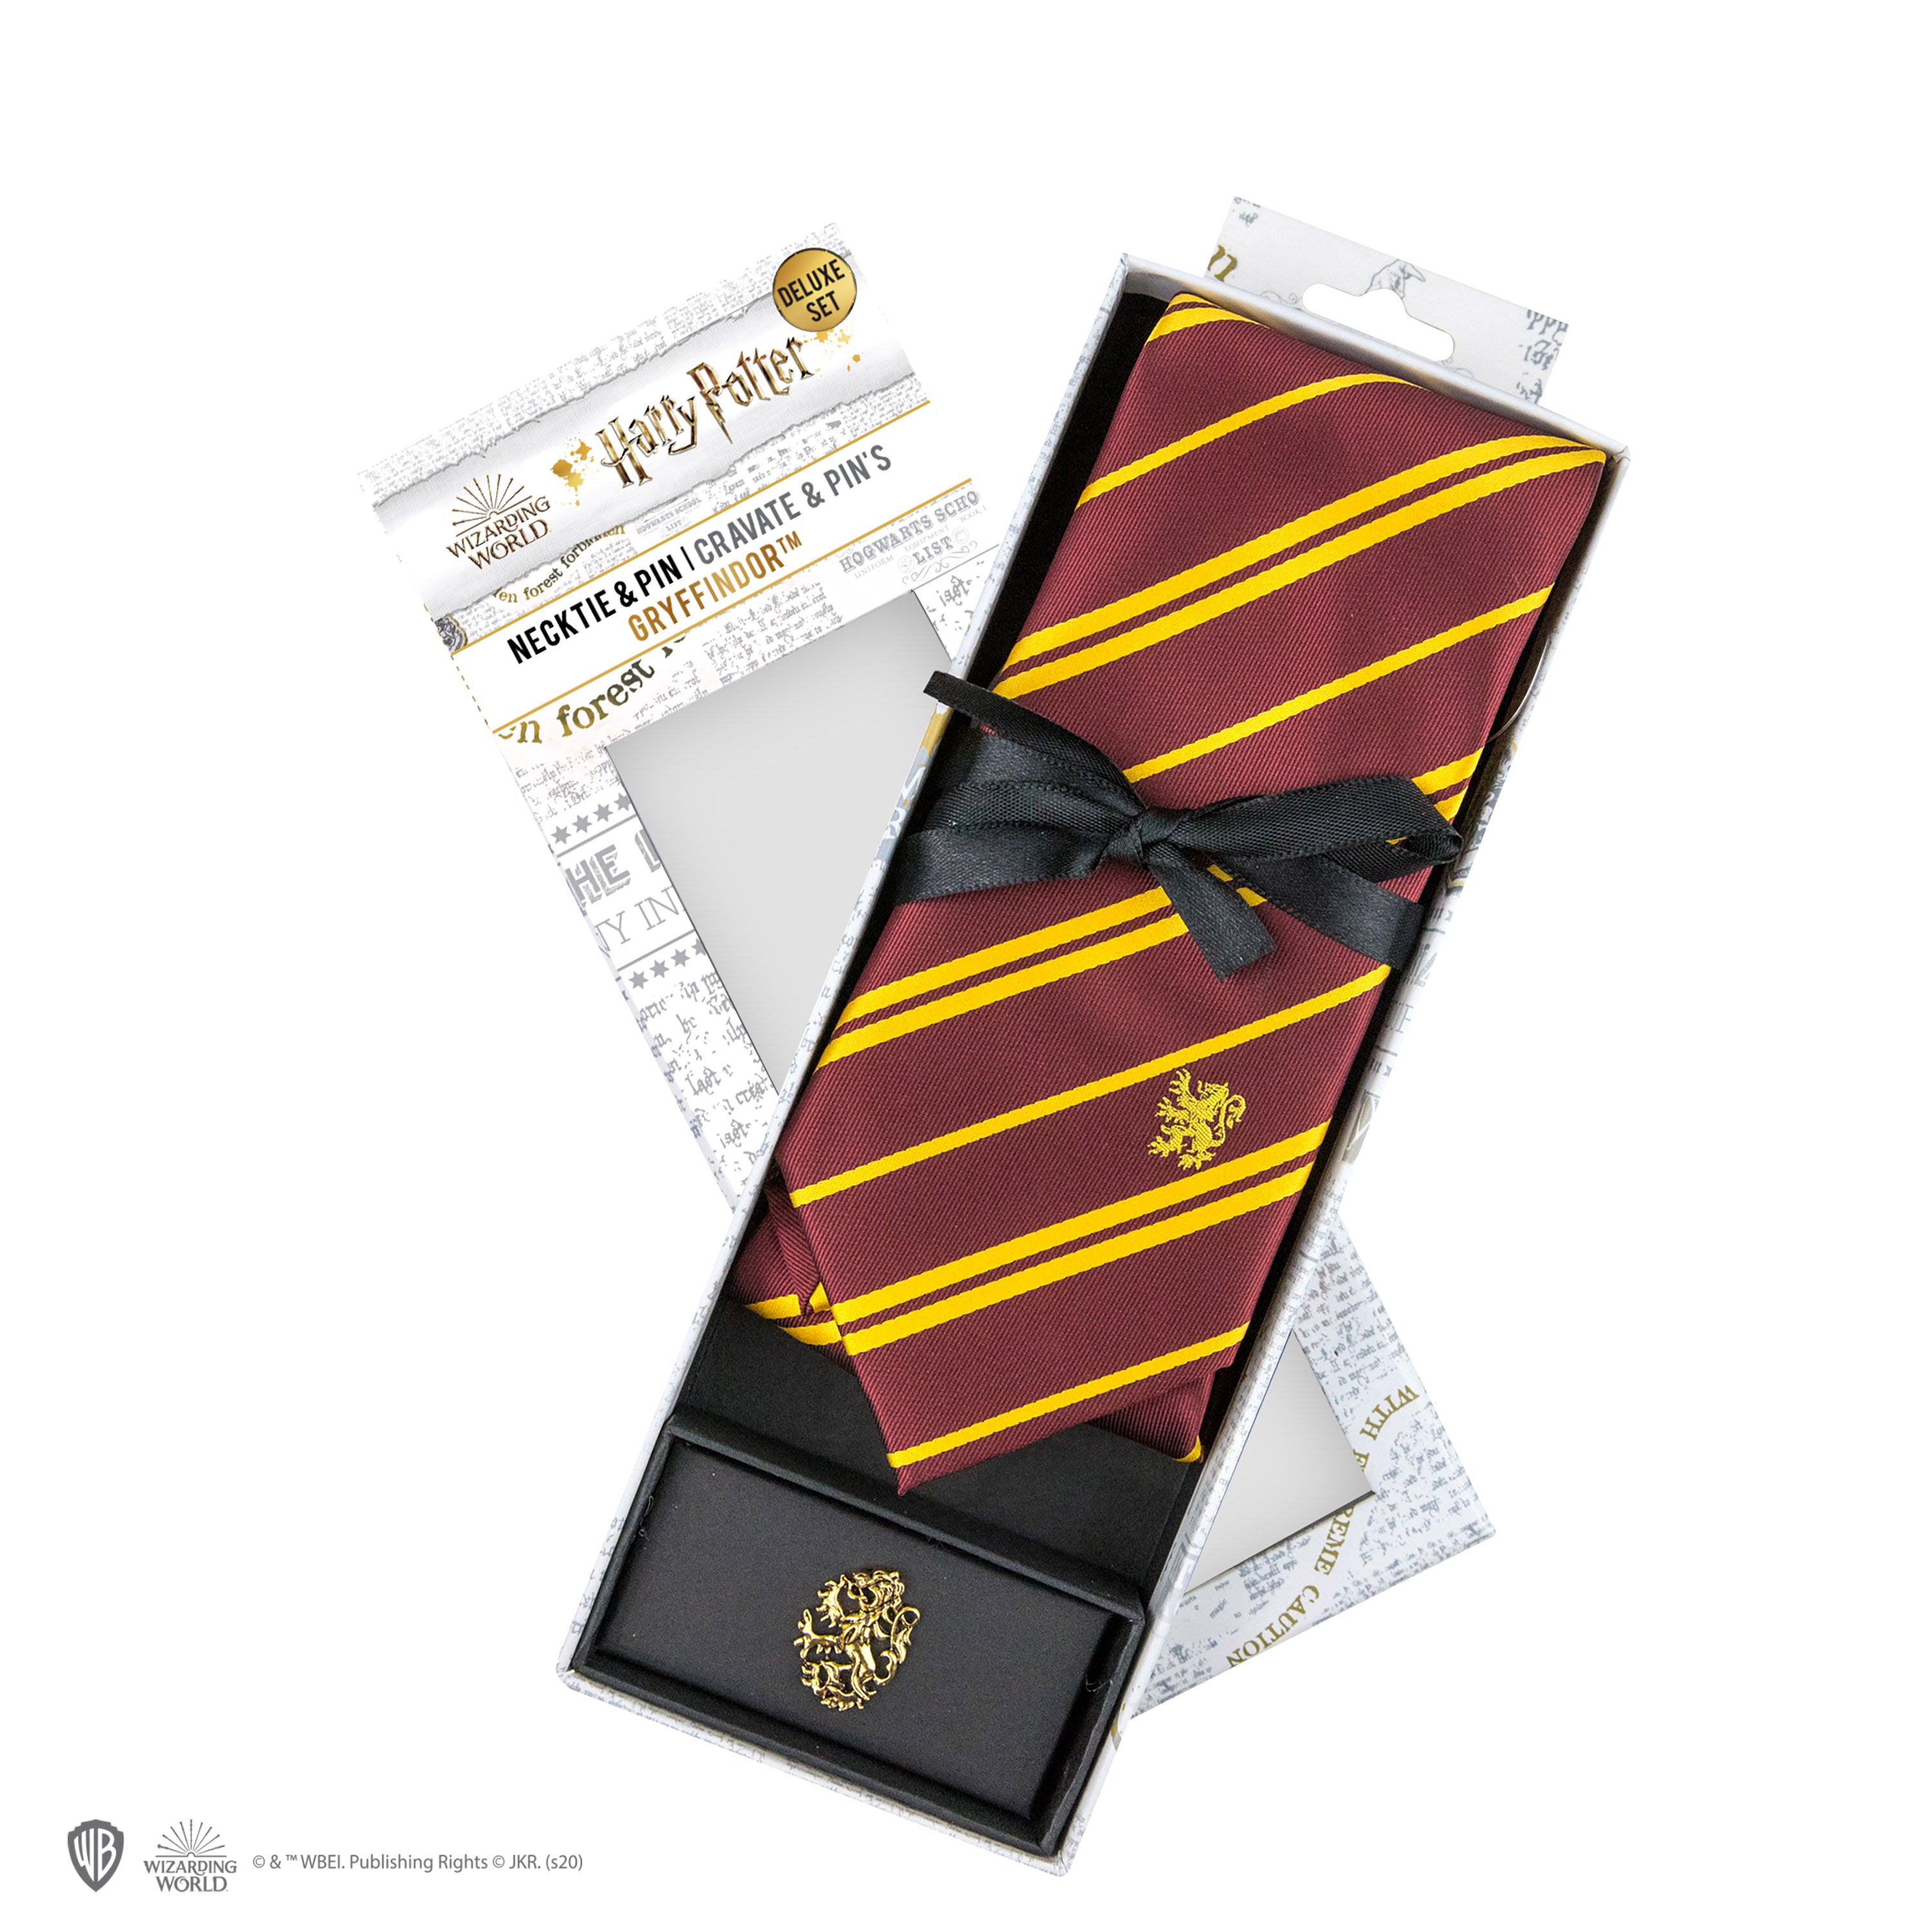 Gryffindor Tie - Deluxe Edition, Harry Potter